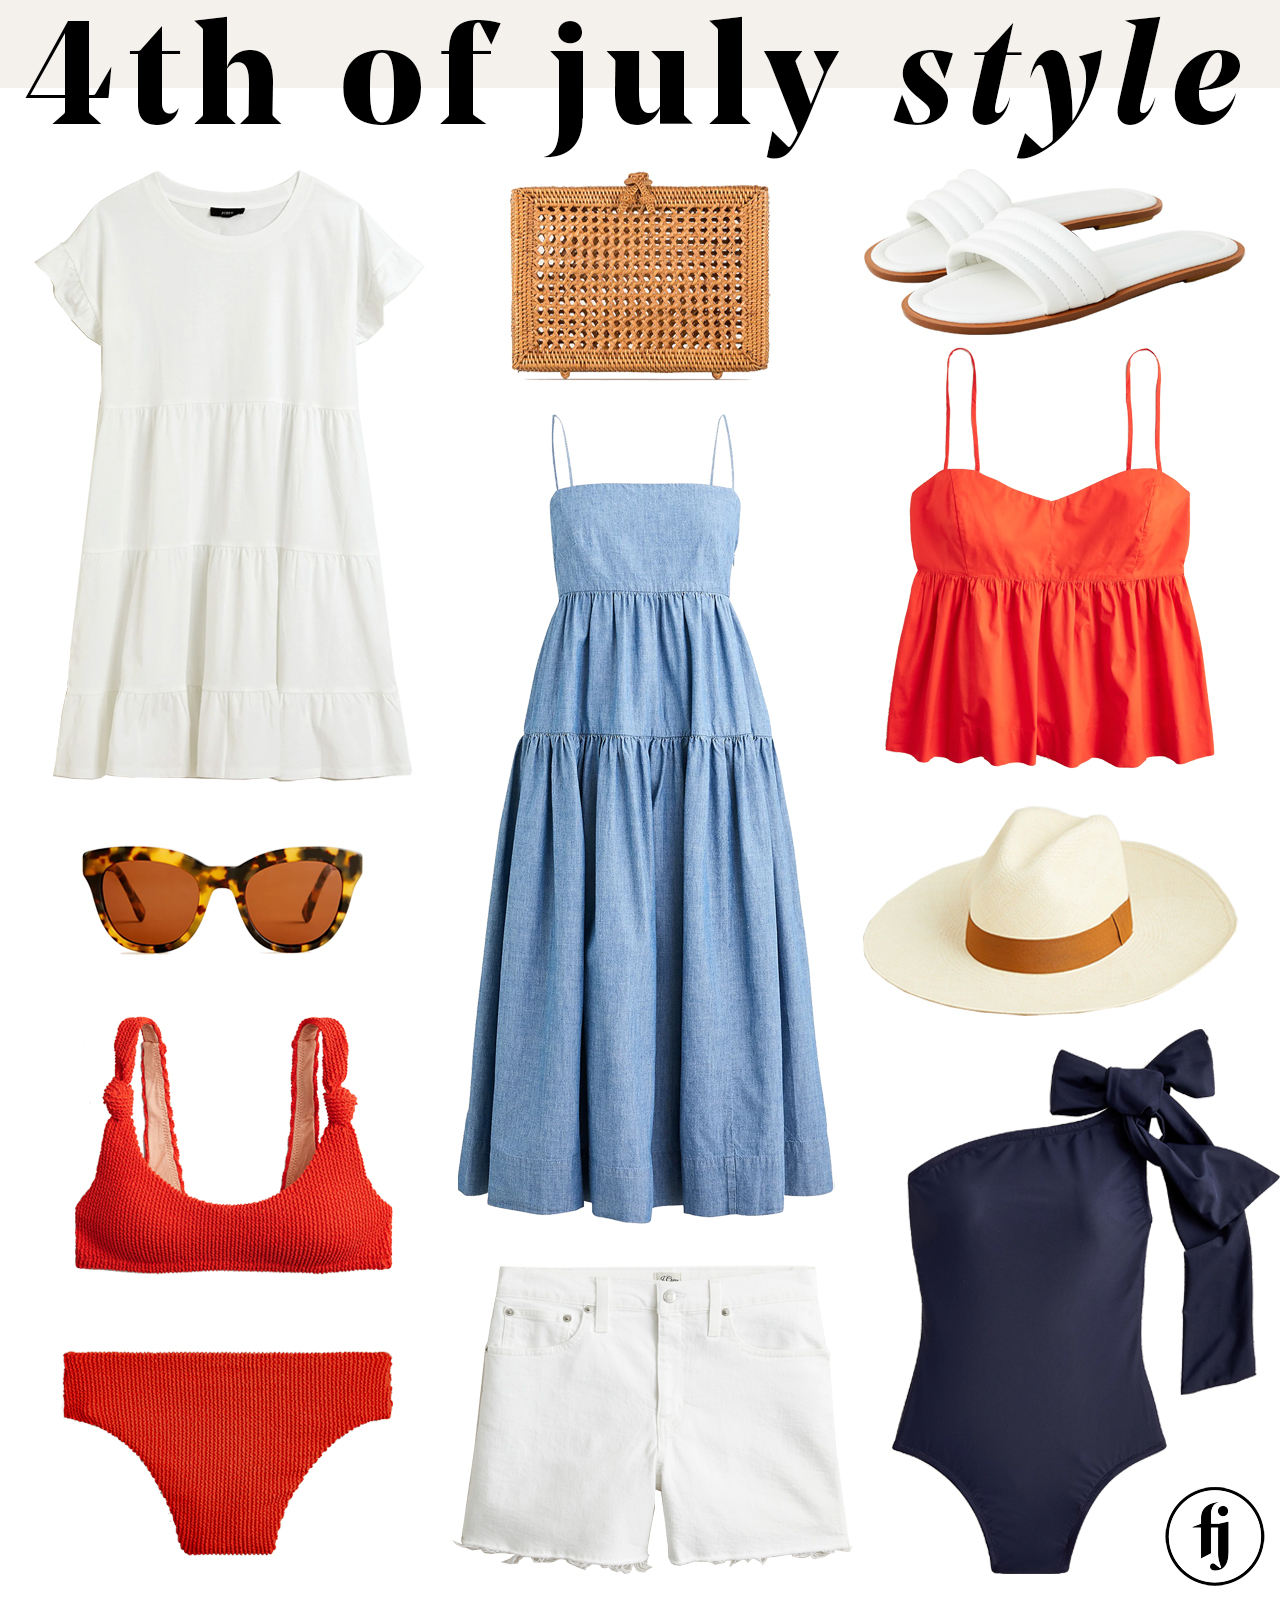 July Outfit Ideas 2020 - StyledJen